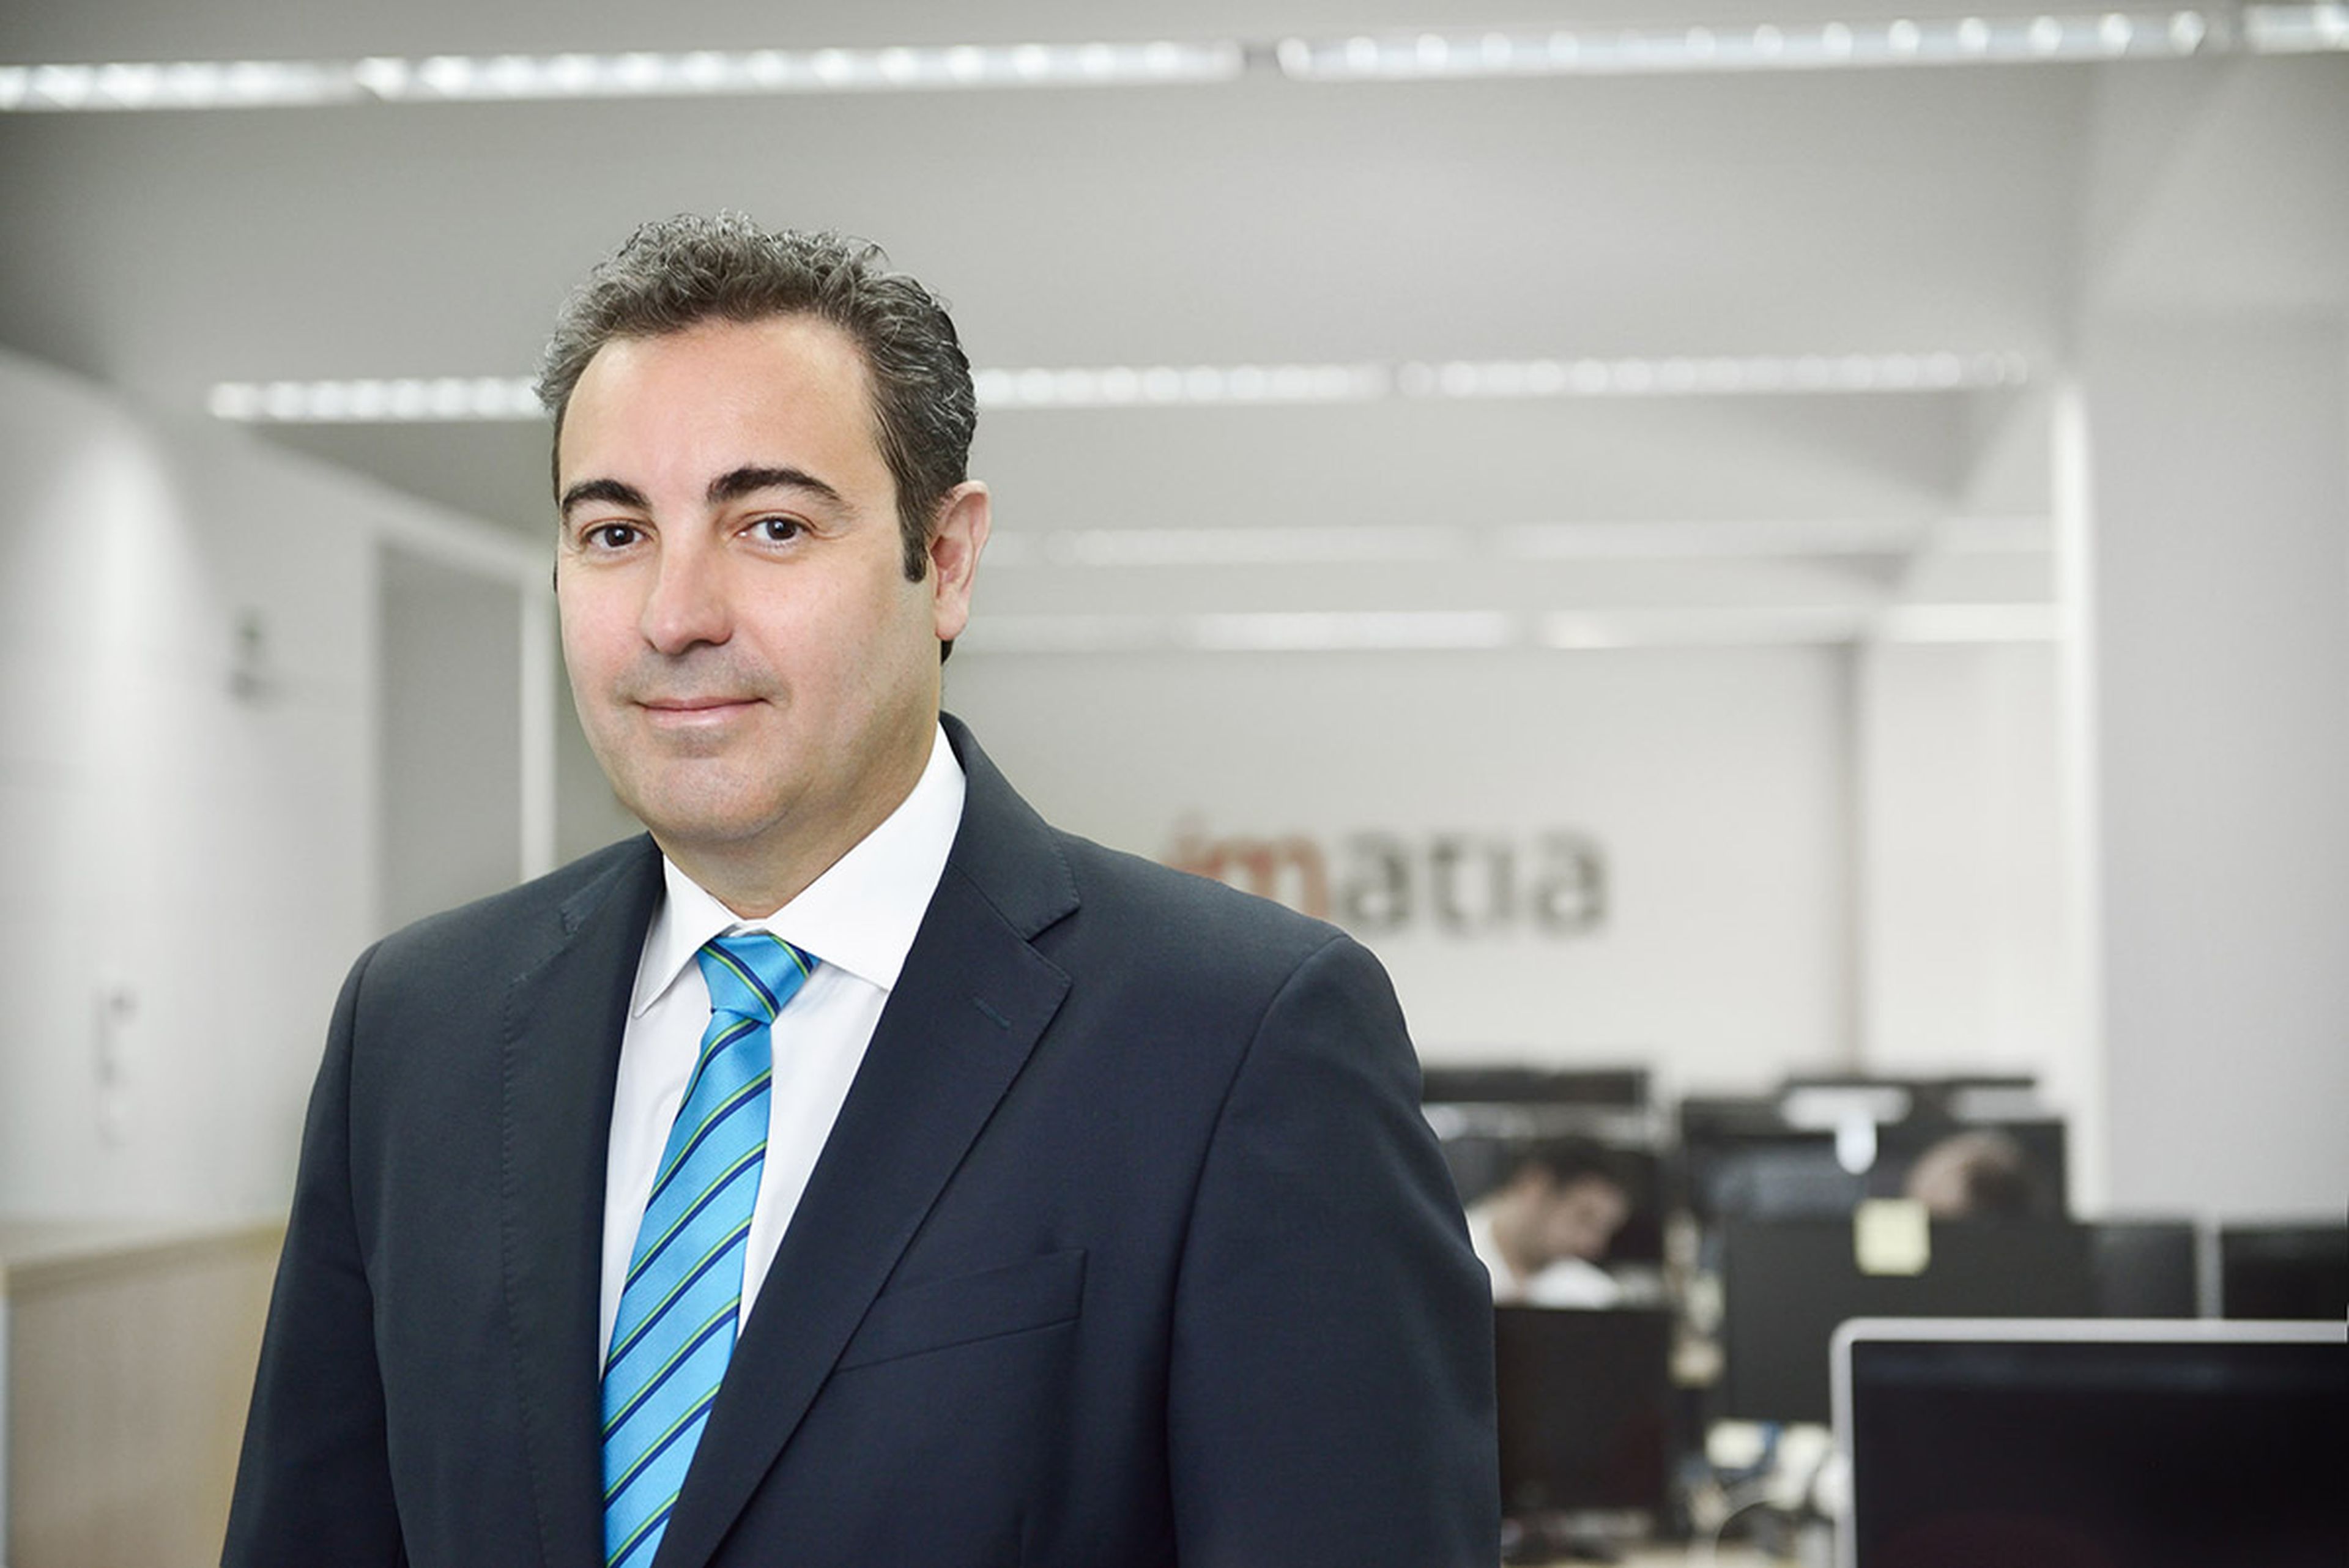 Fernando Vázquez, CEO de Imatia.